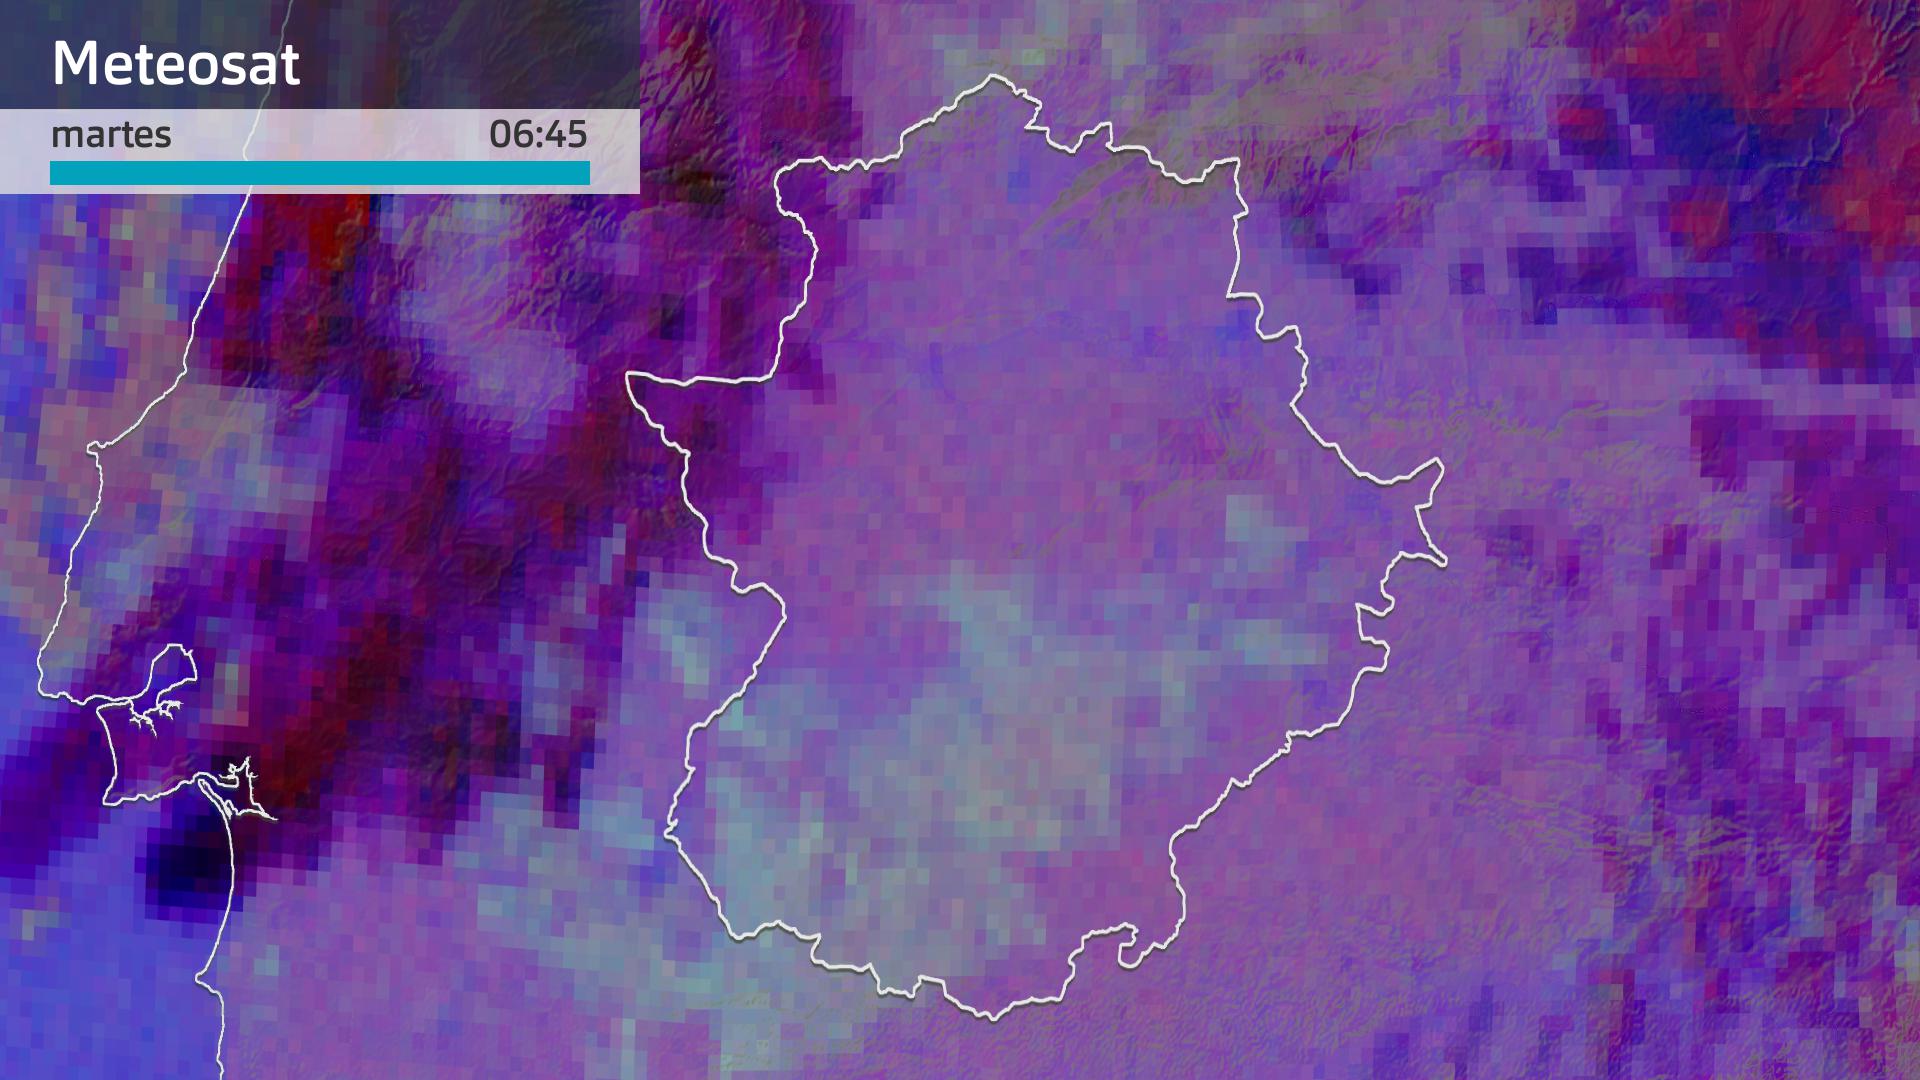 Imagen del Meteosat martes 21 de mayo 6:45 h.